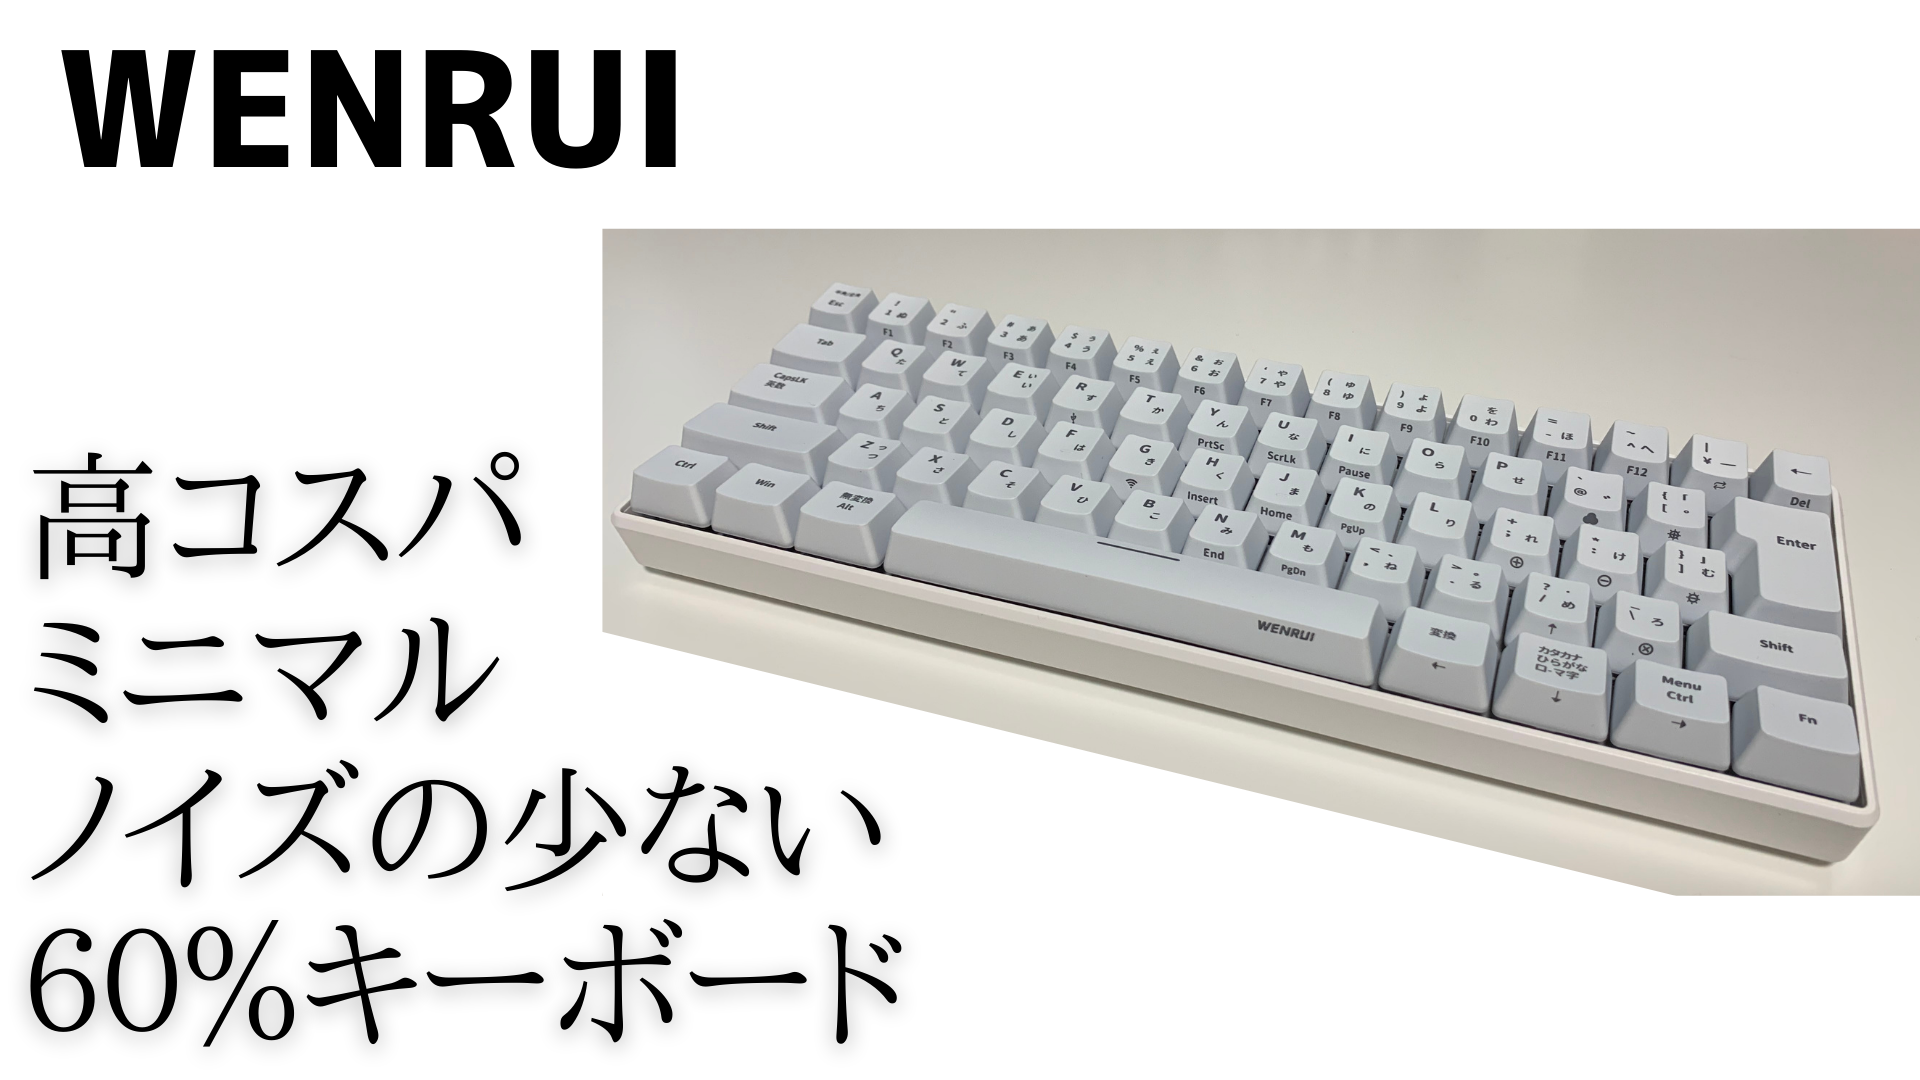 WENRUI メカニカルキーボード 日本語配列 ゲーミングキーボード 63キー